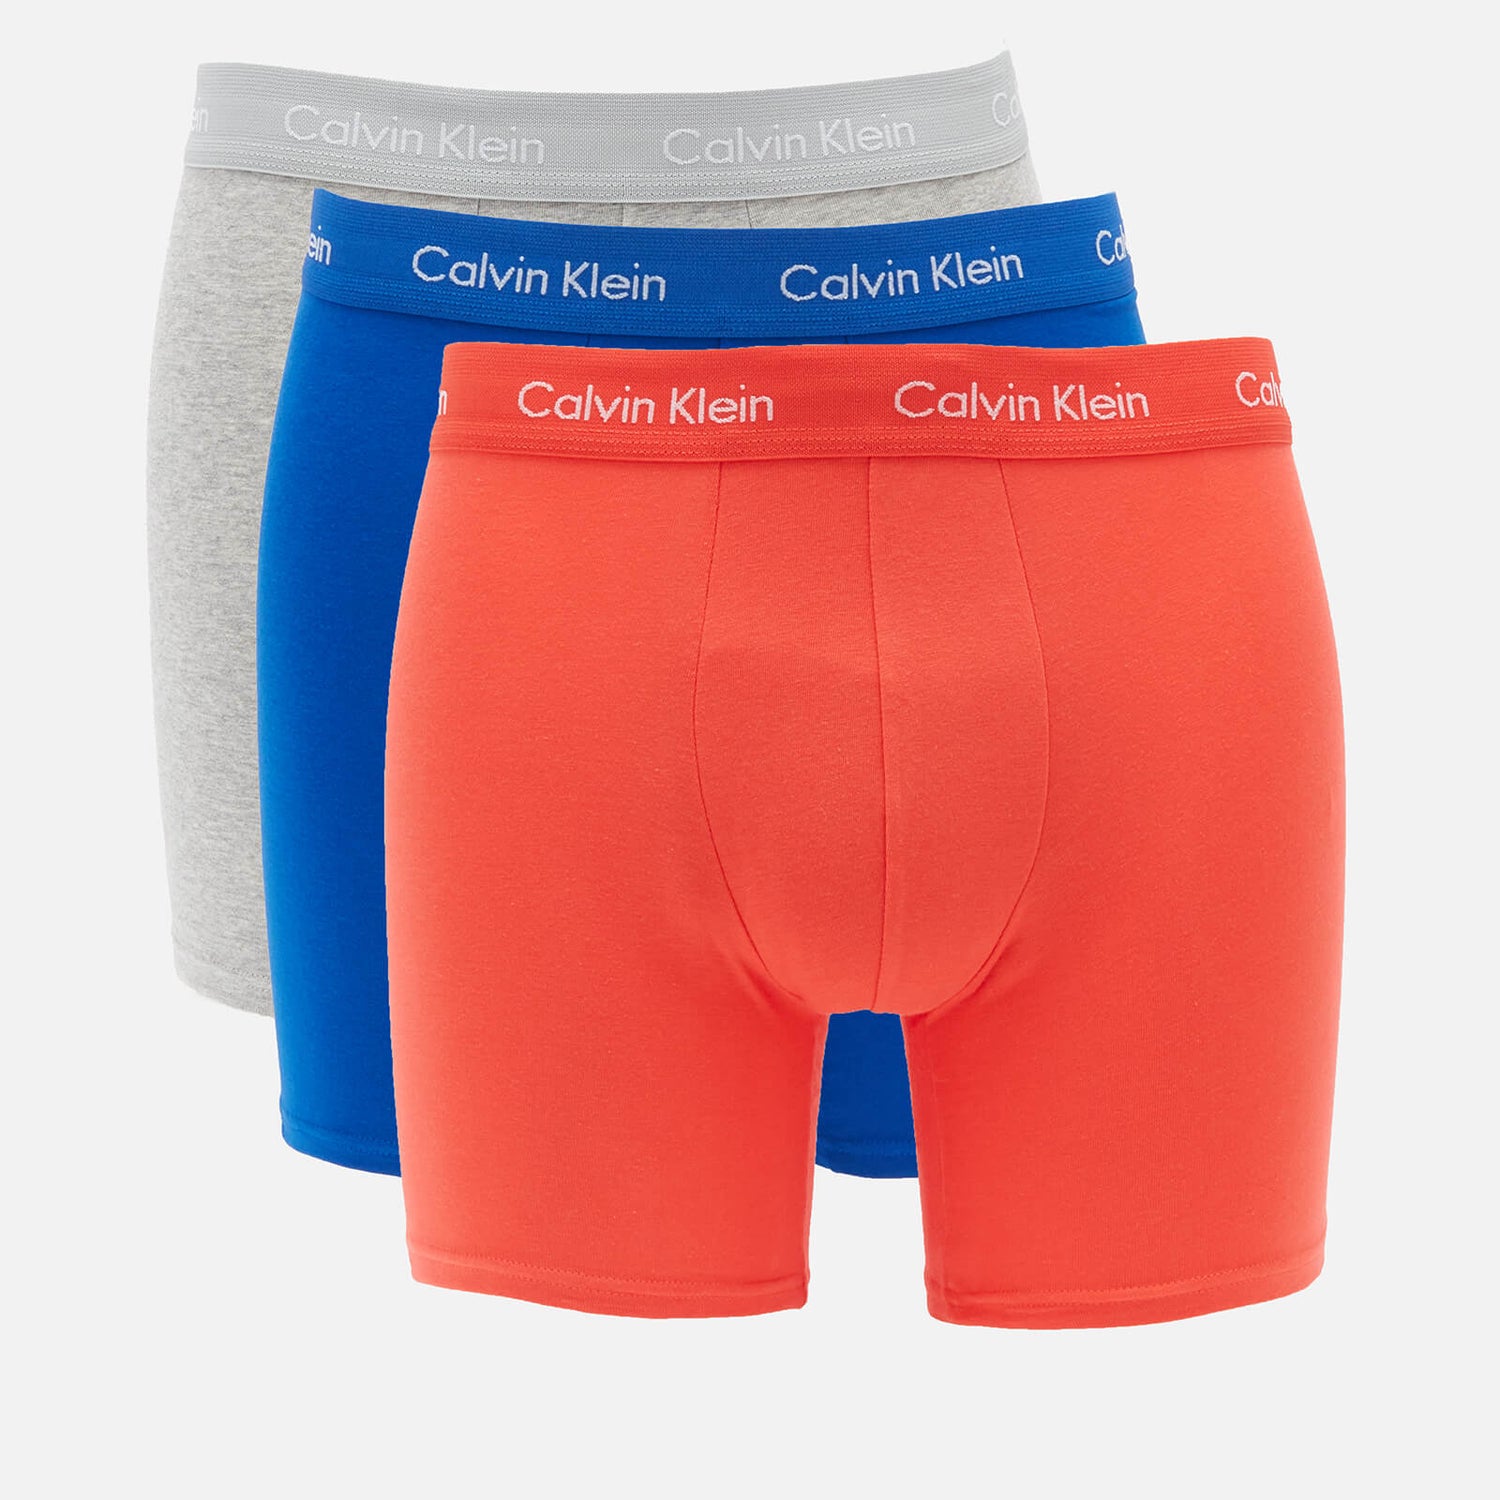 Calvin Klein Men's 3 Pack Boxer Briefs - Royalty/Grey Heather/Exotic Coral